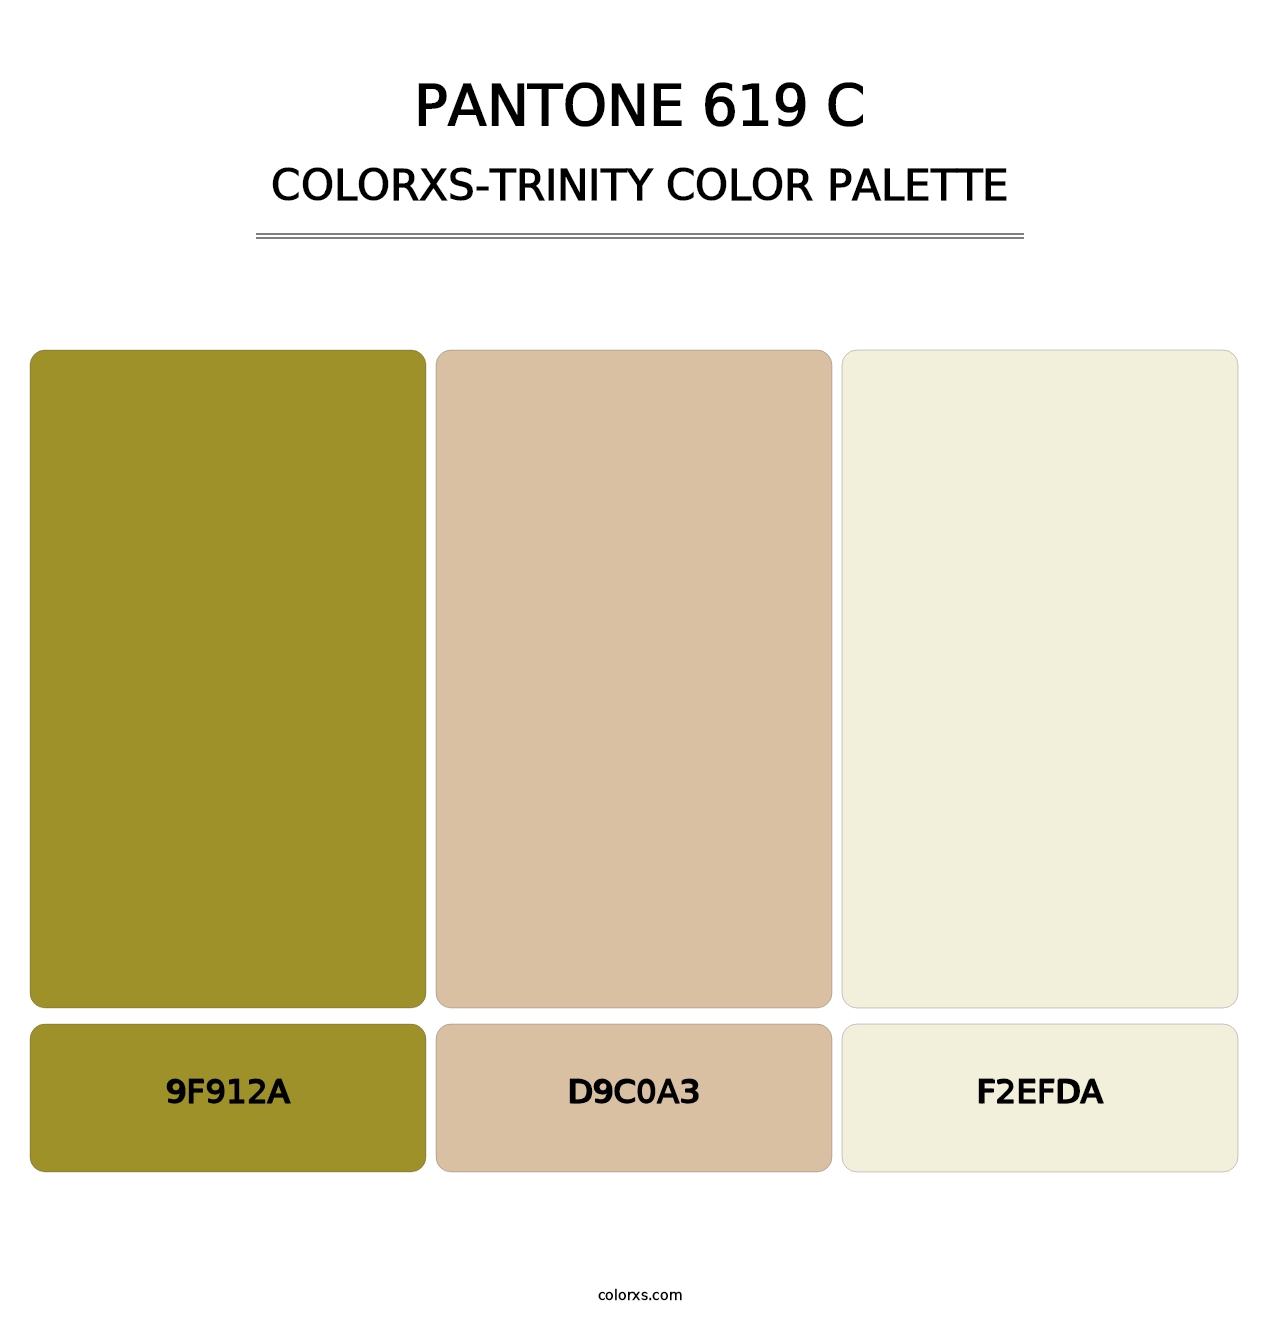 PANTONE 619 C - Colorxs Trinity Palette